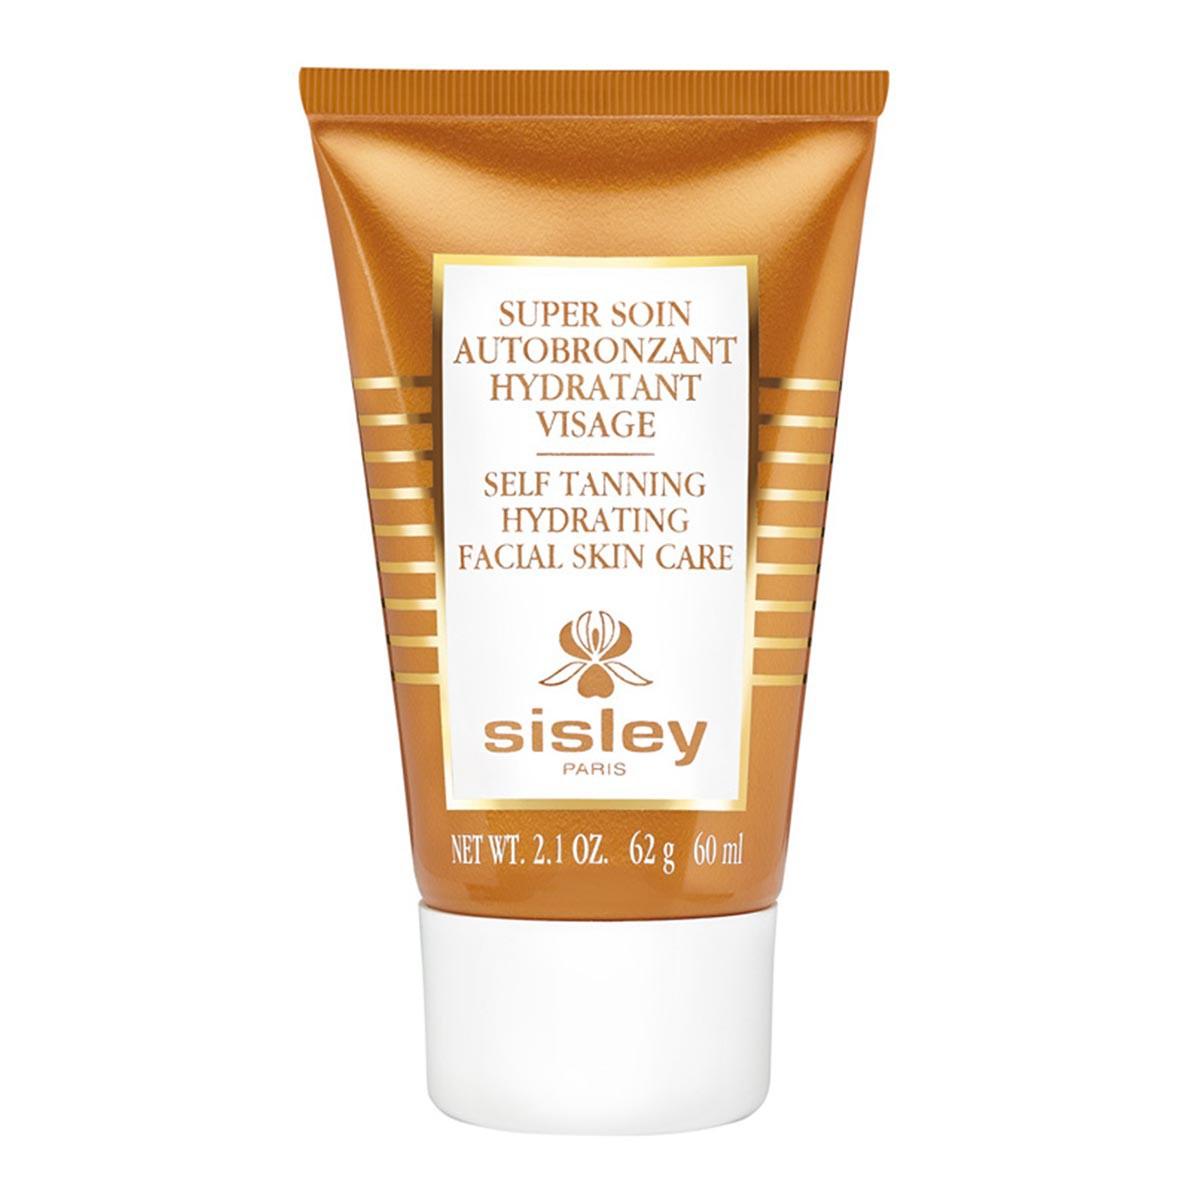 sisley-super-soin-autobronzant-hydratant-visage-60ml